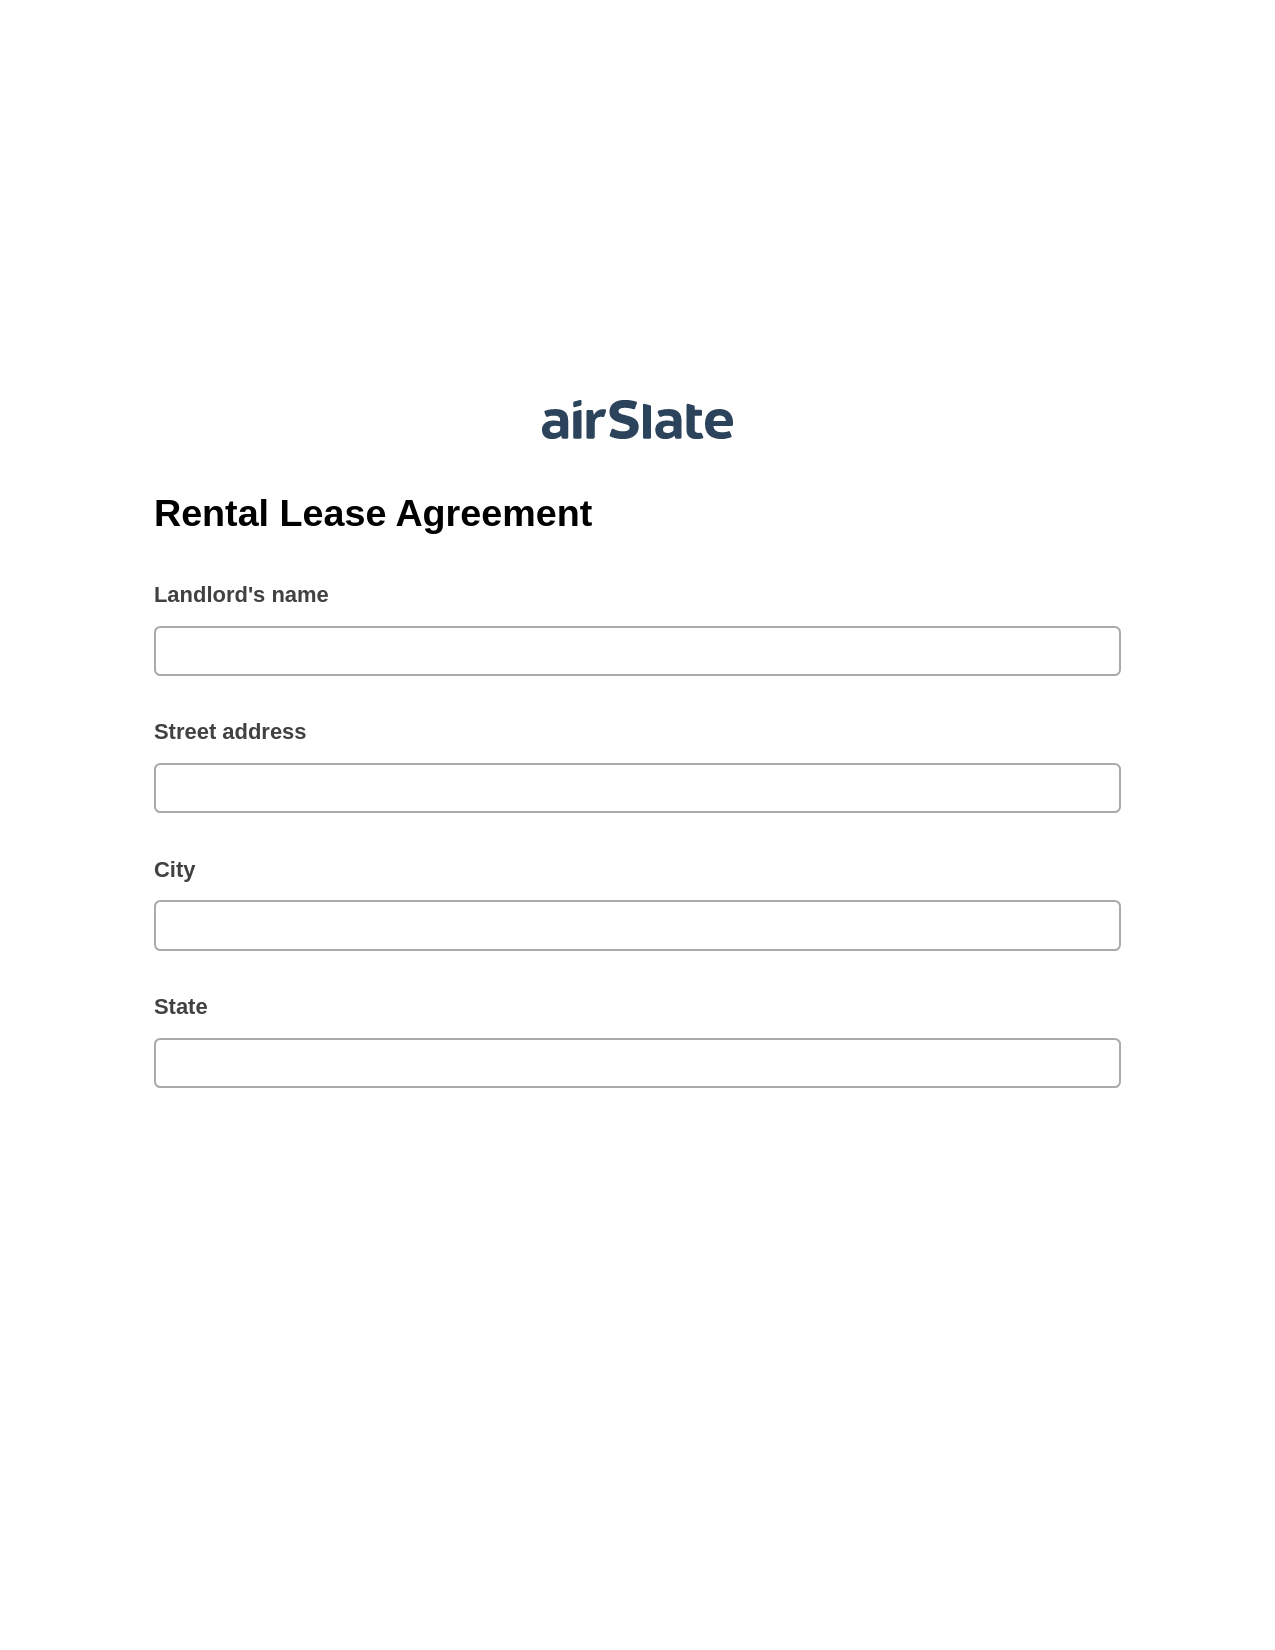 Rental Lease Agreement Pre-fill from CSV File Dropdown Options Bot, Invoke Salesforce Process Bot, Box Bot